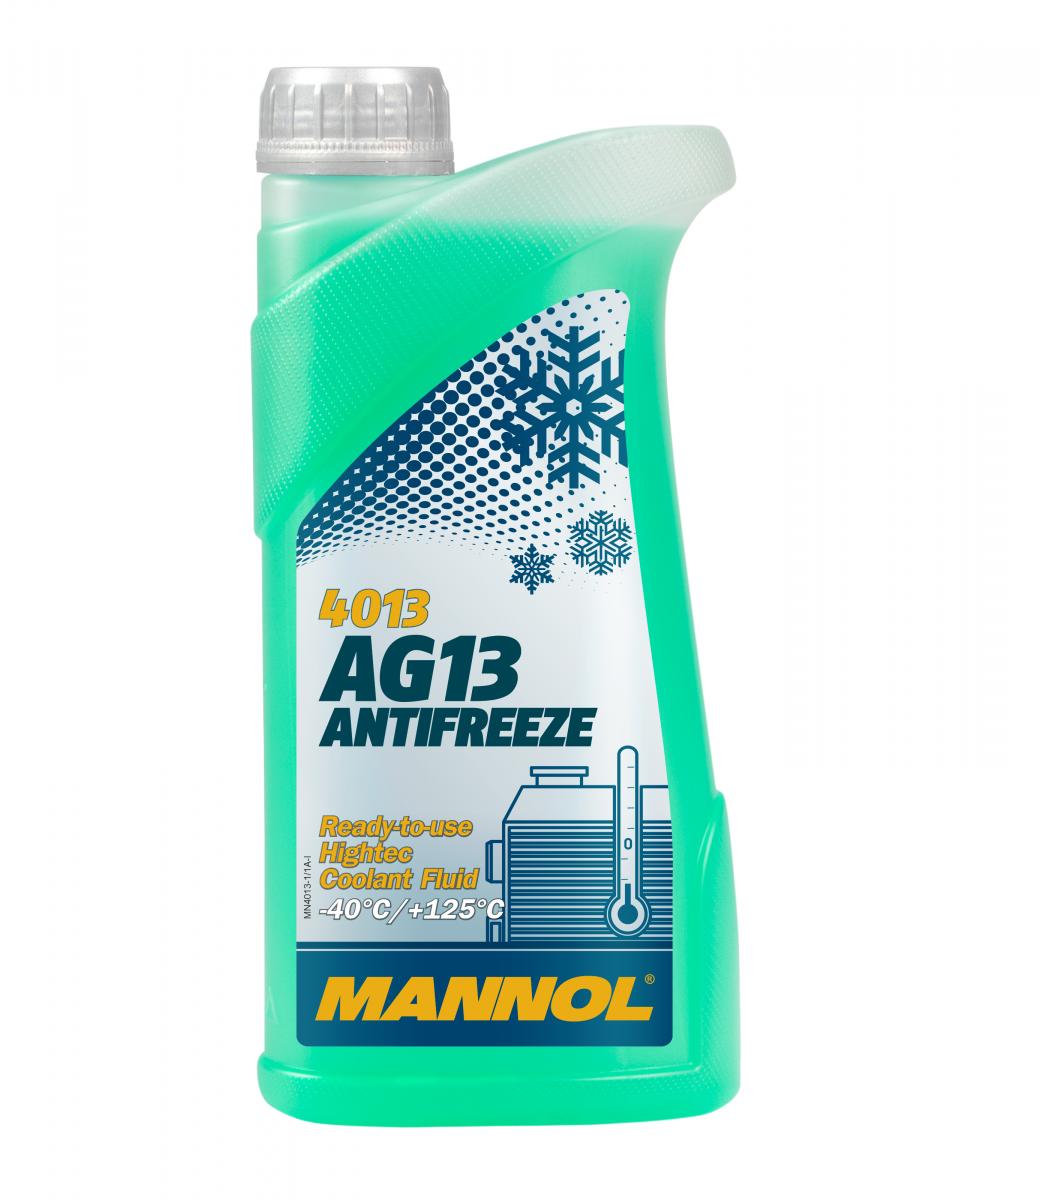 1 Liter MANNOL hightech Antifreeze AG13 Frostschutz Fertiggemisch grün -40°C G13